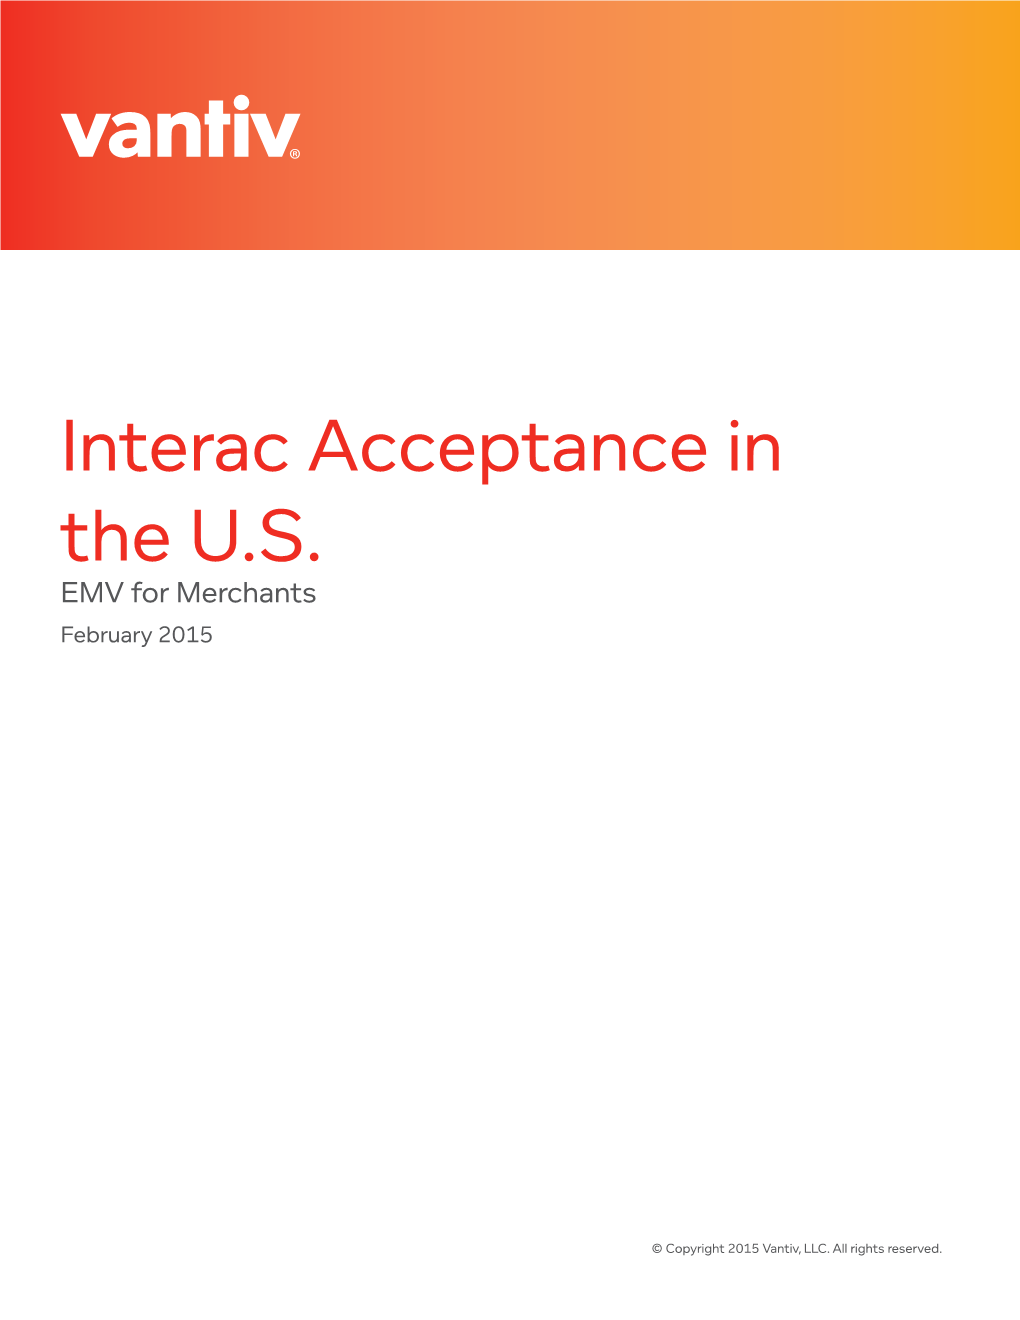 Interac Acceptance in the U.S. EMV for Merchants February 2015